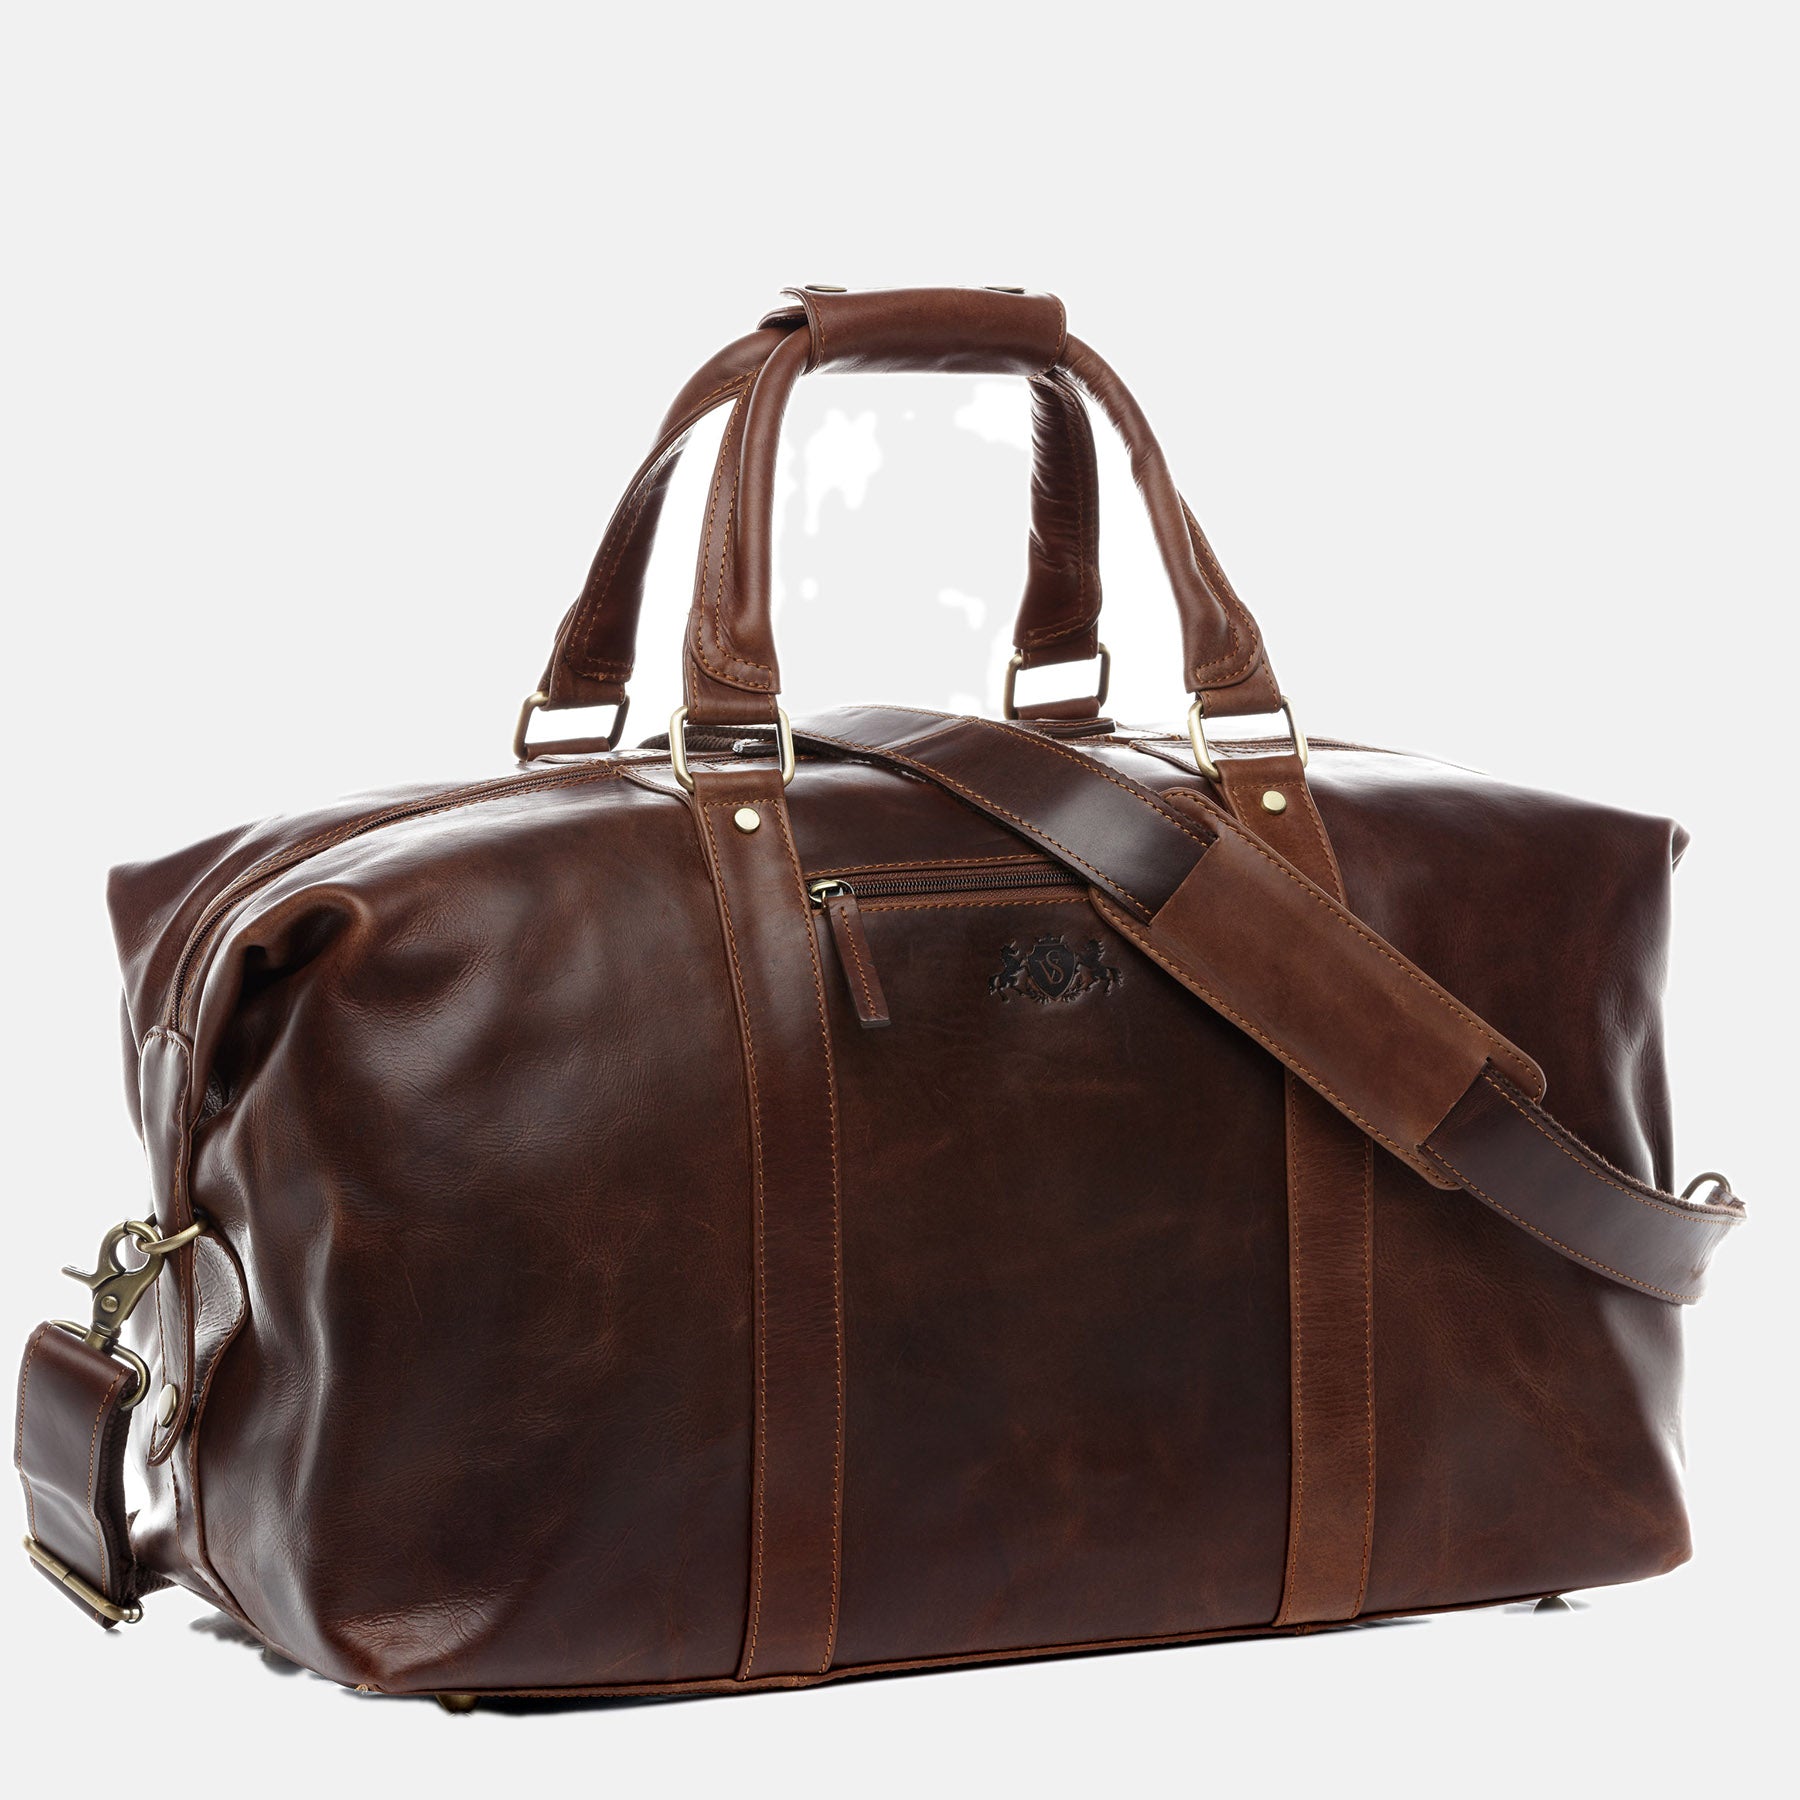 XL Travel bag ZANE natural leather brown-cognac